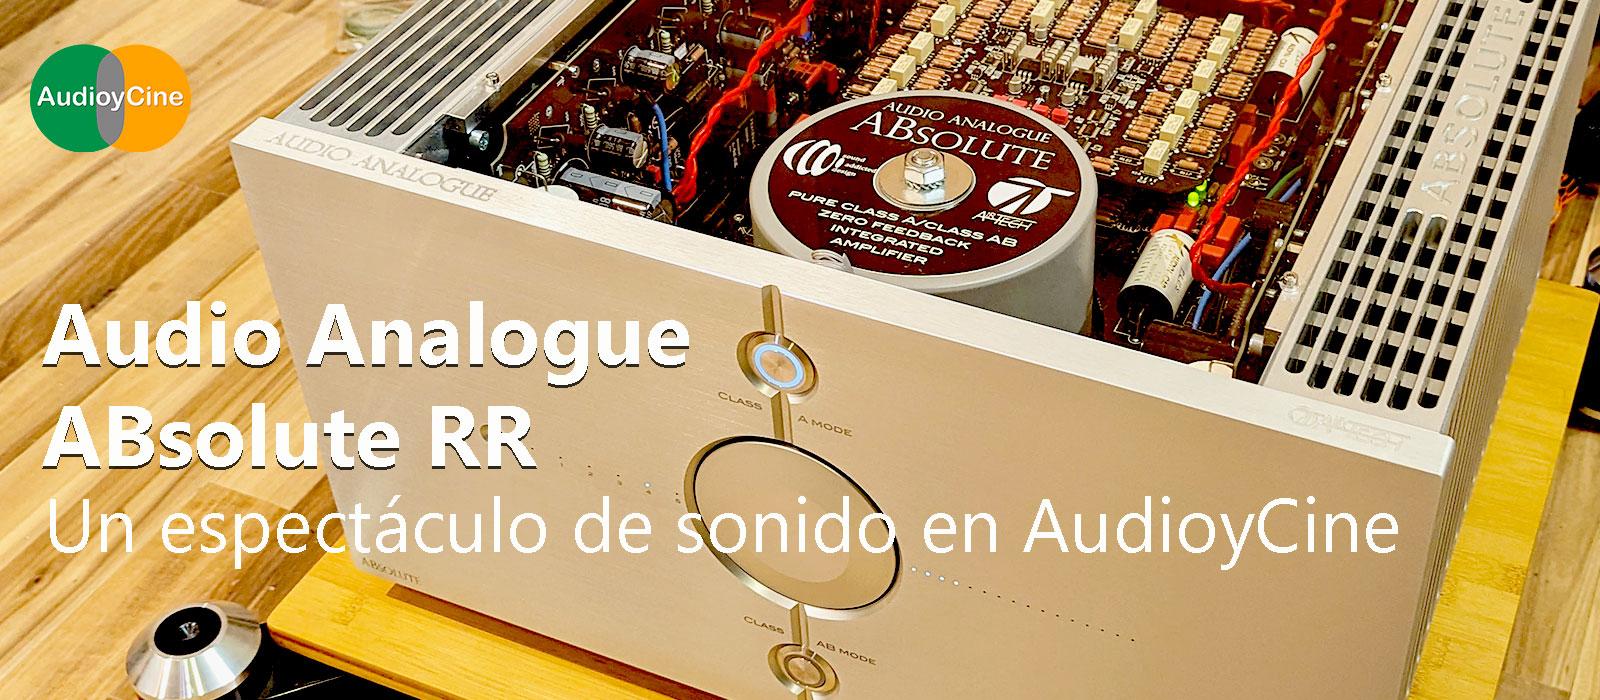 amplificador-Audio-analogue-absolute-rr-1600x700-rev1